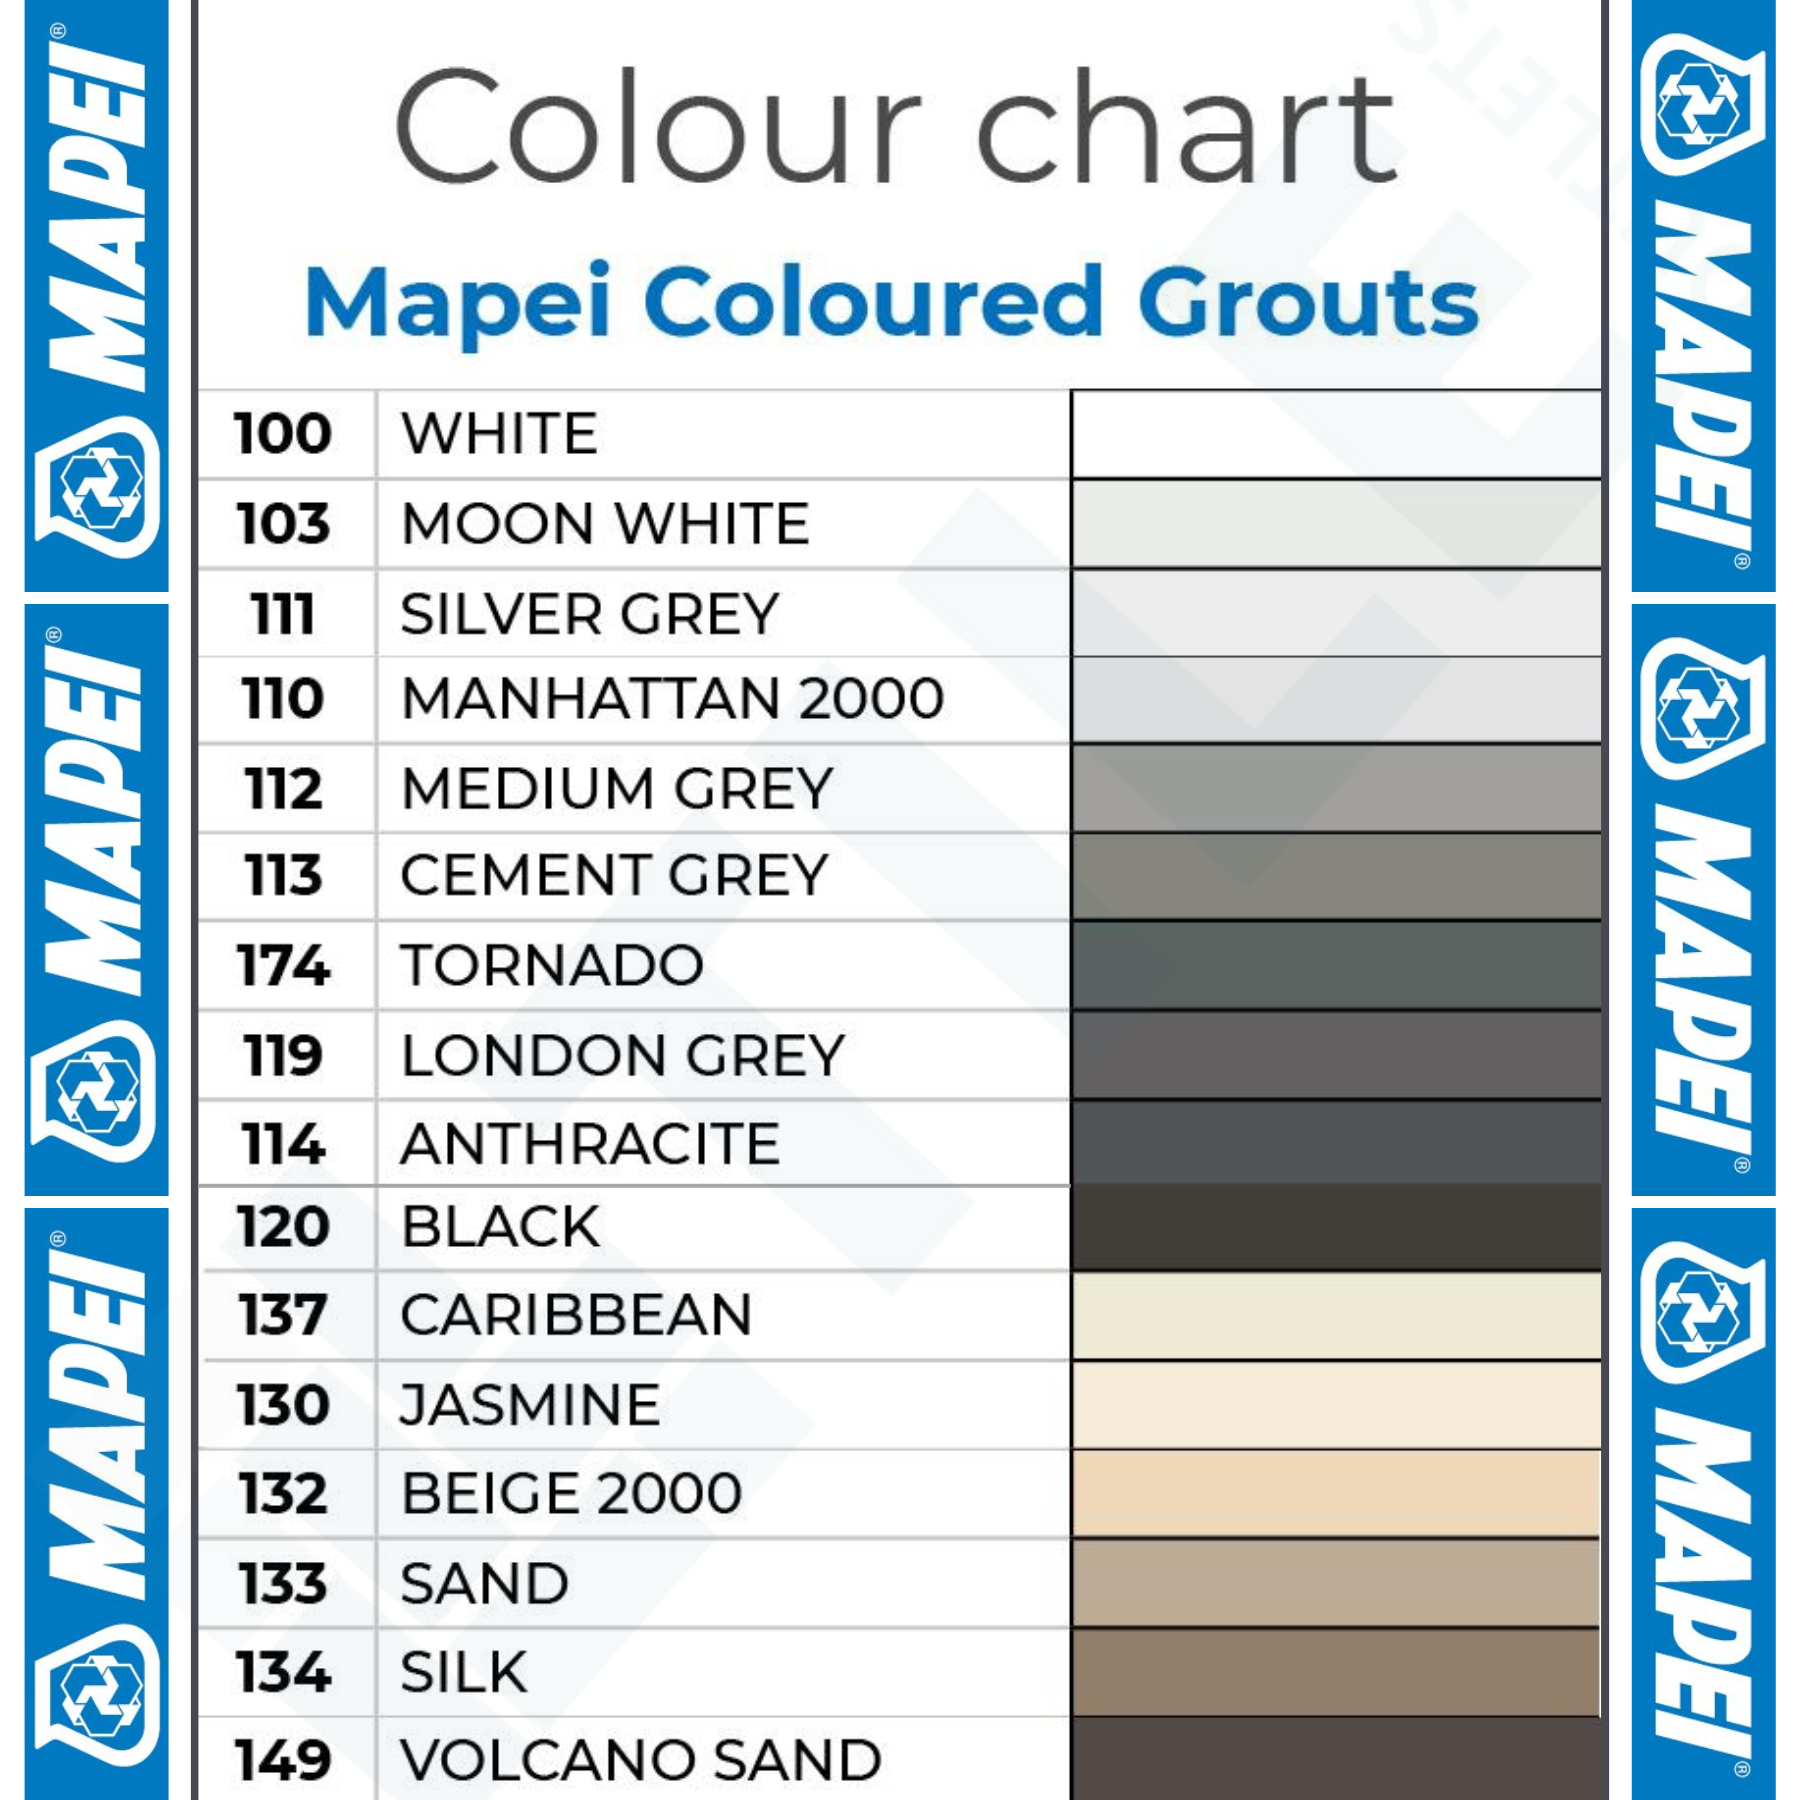 Mapei UltraColour Plus Silk 134 Grout